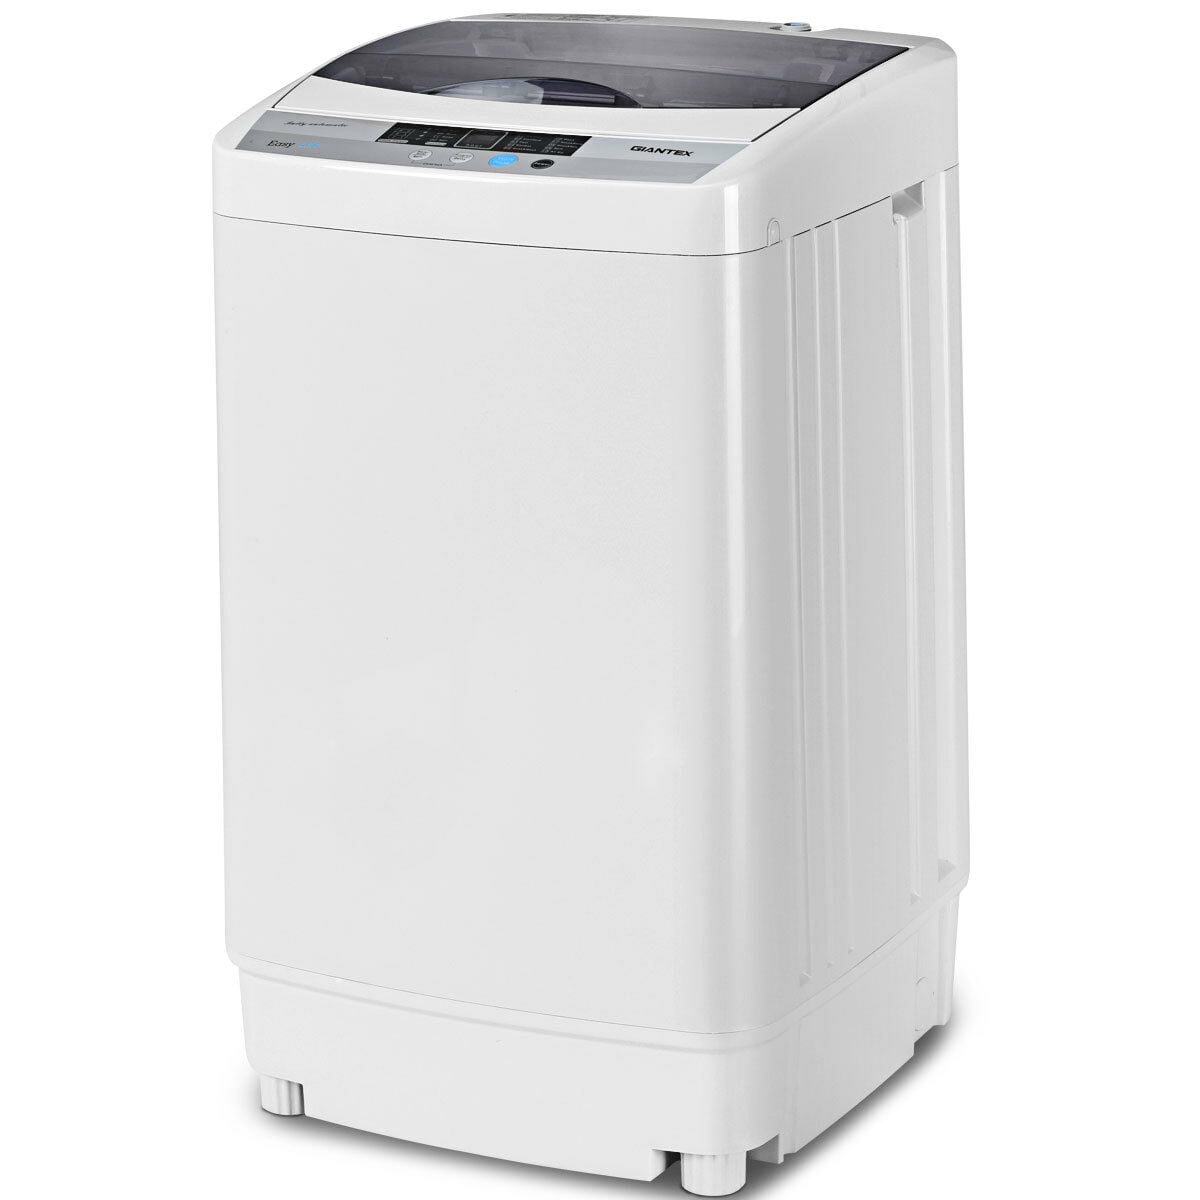 Portable Compact Washing Machine 1.34 